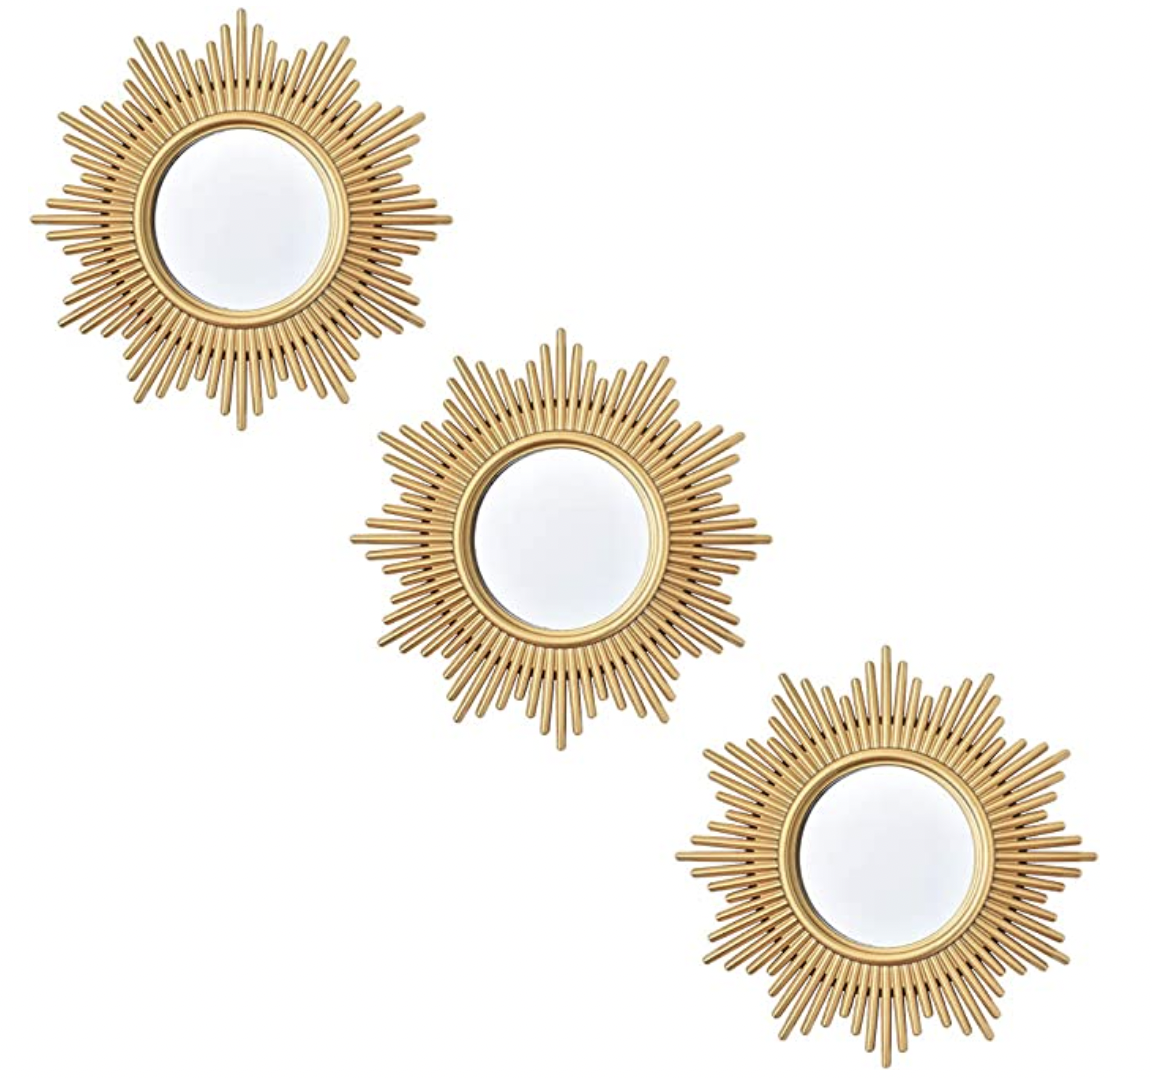 Three small decorative wall mirrors in gold